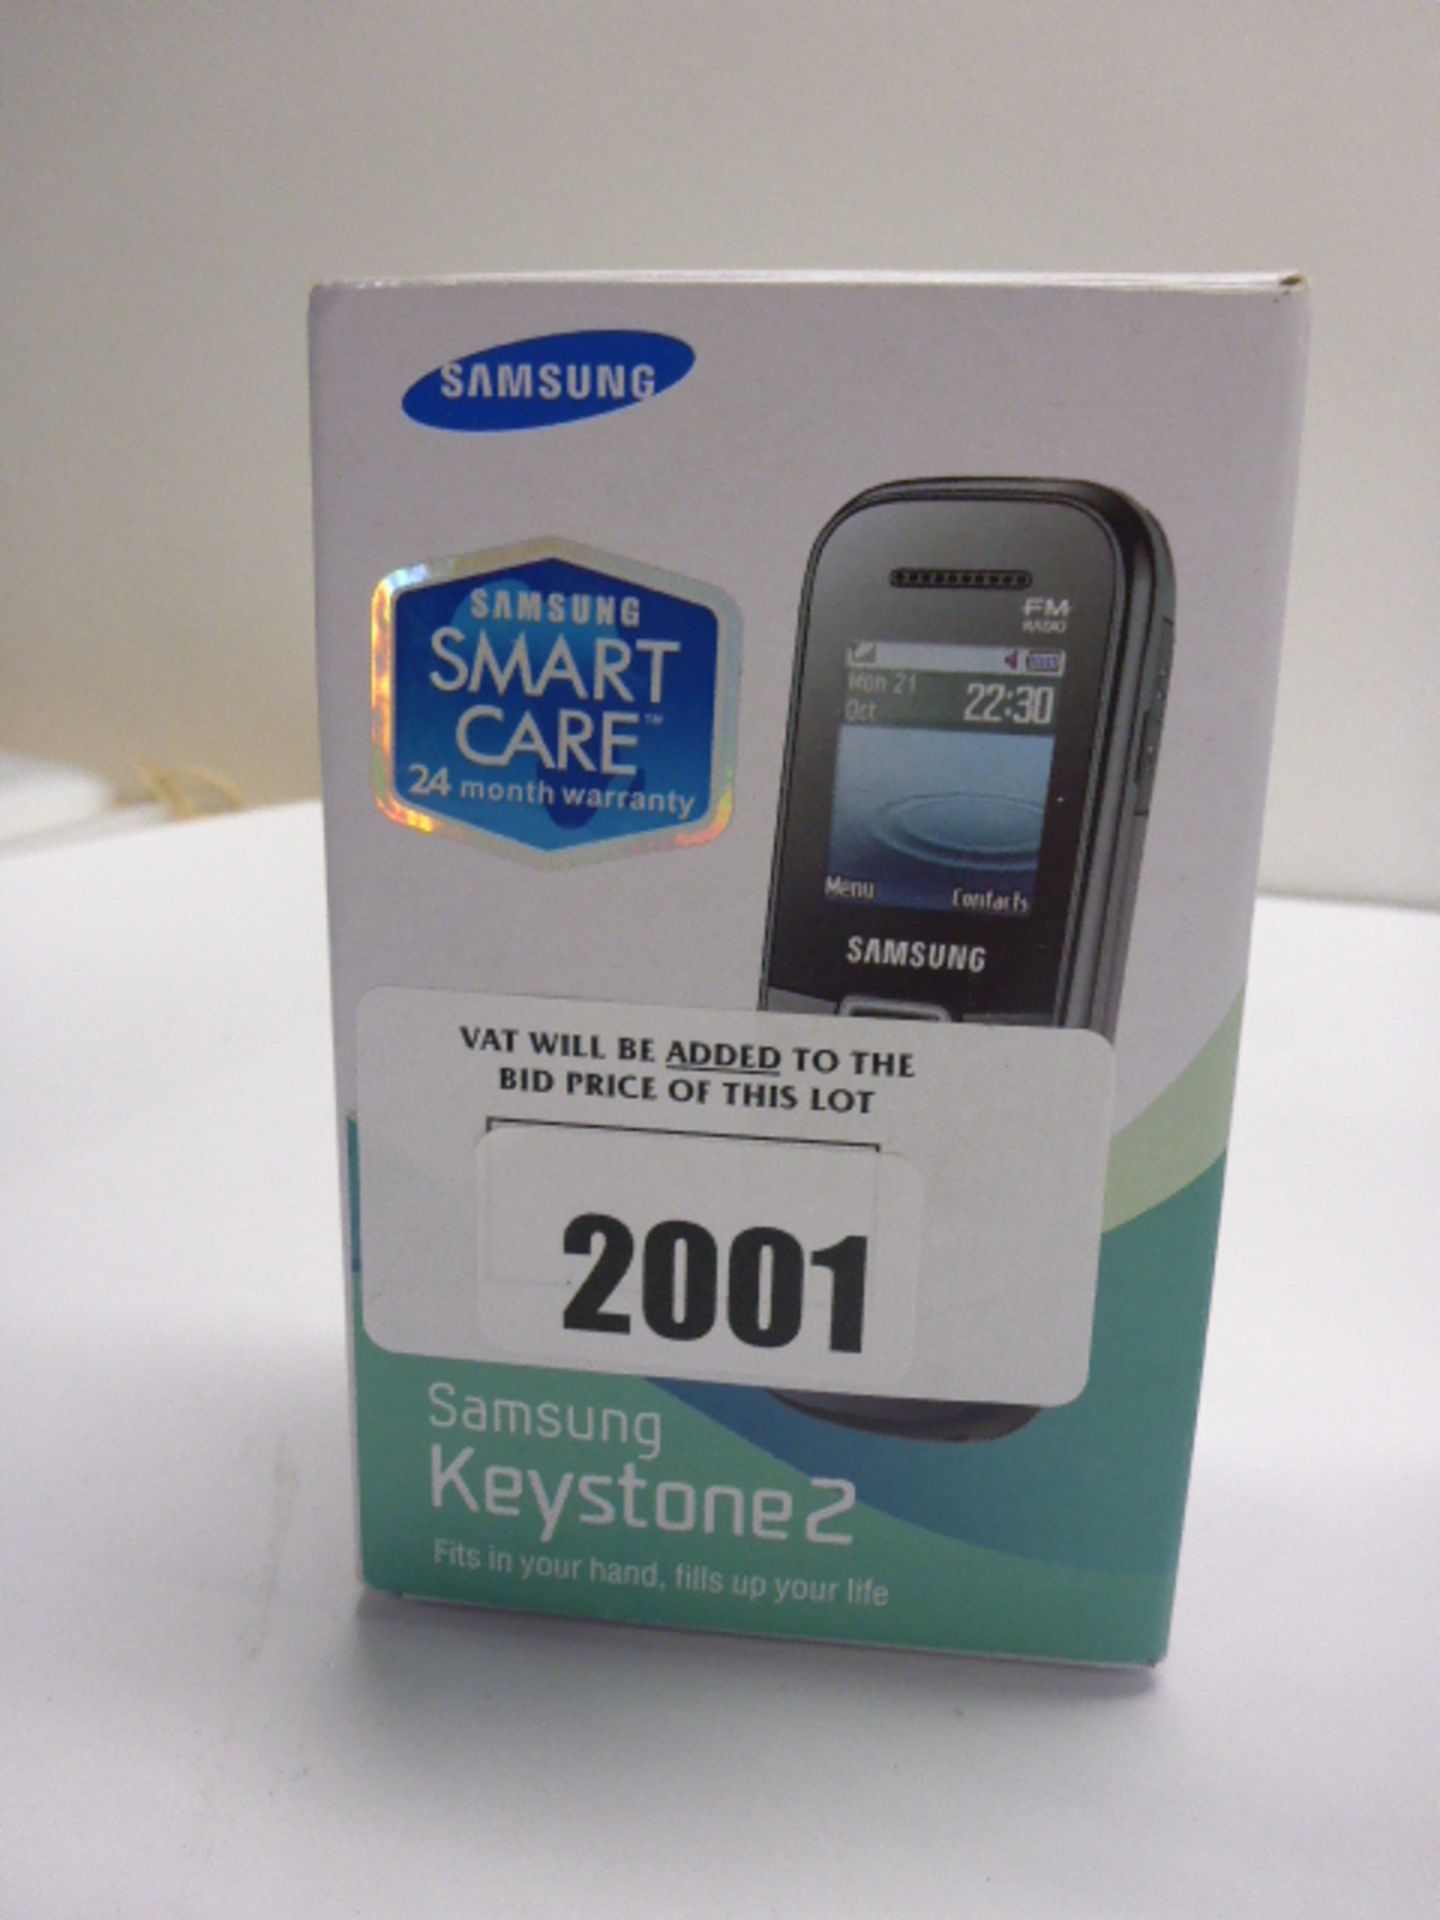 Samsung Keystone2 black mobile phone